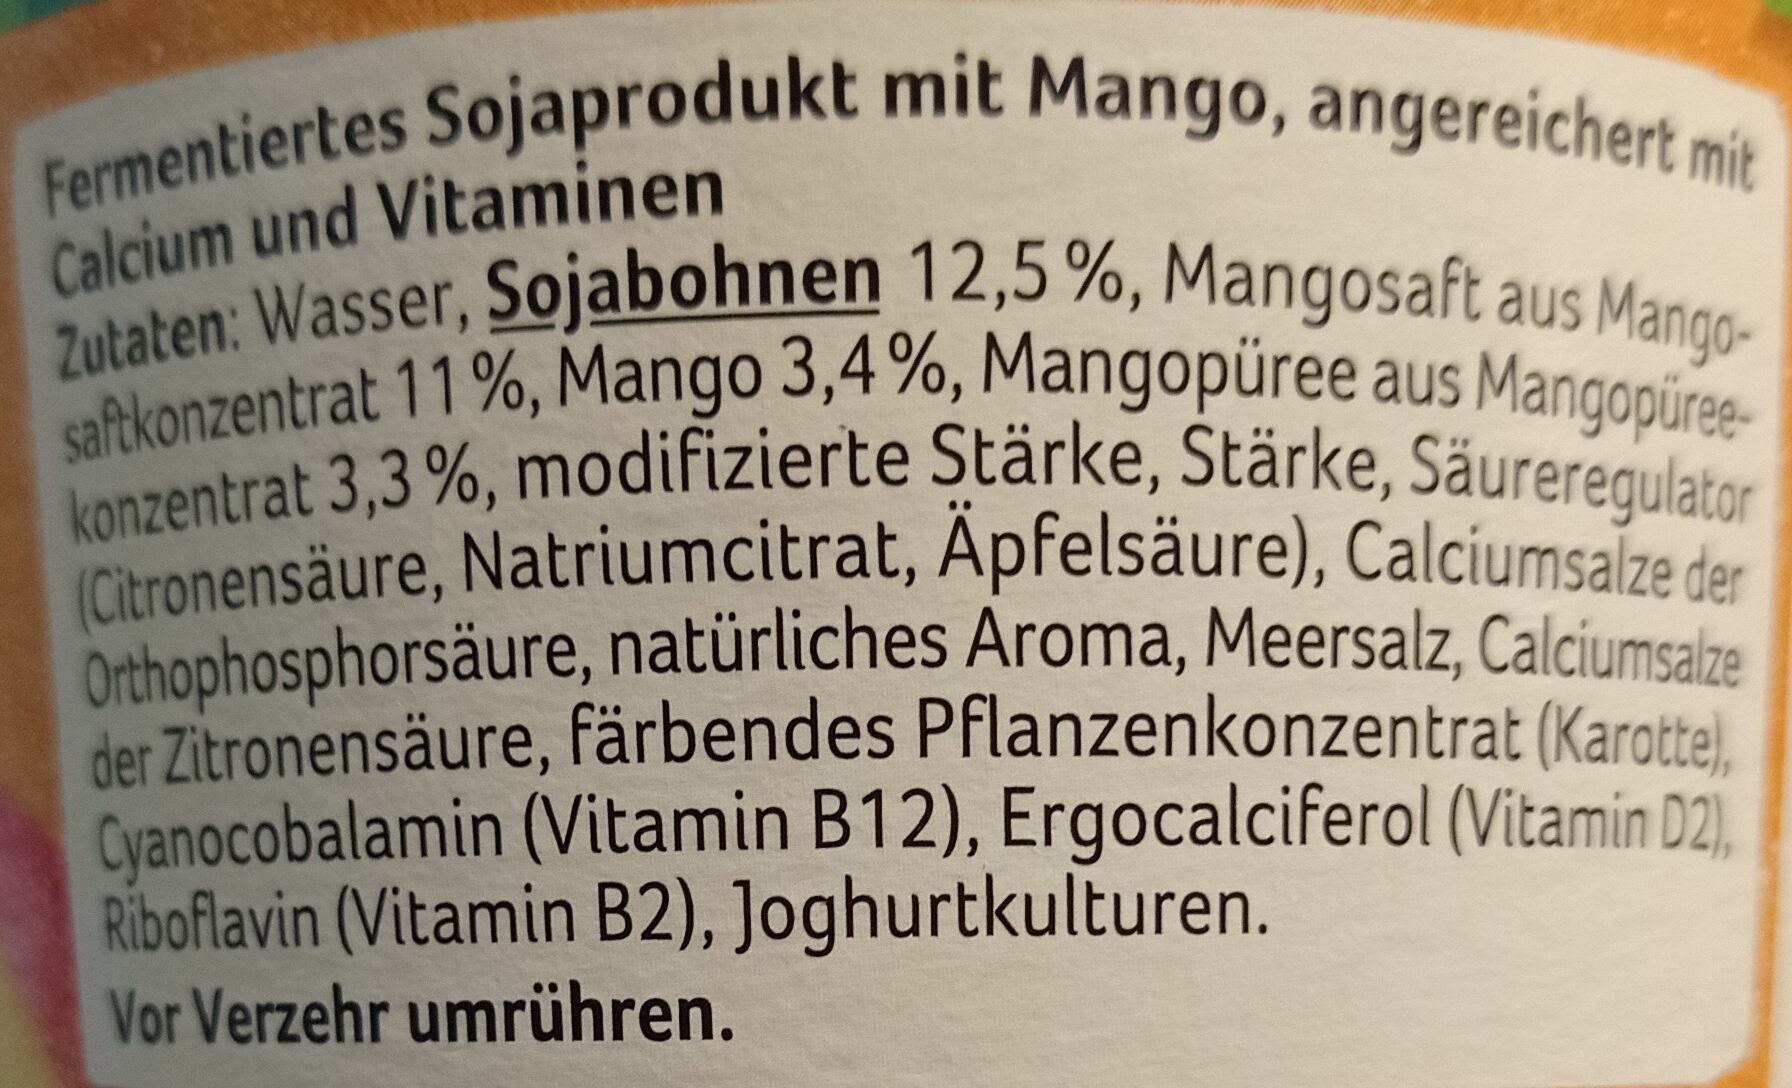 Soja Mango - Zutaten